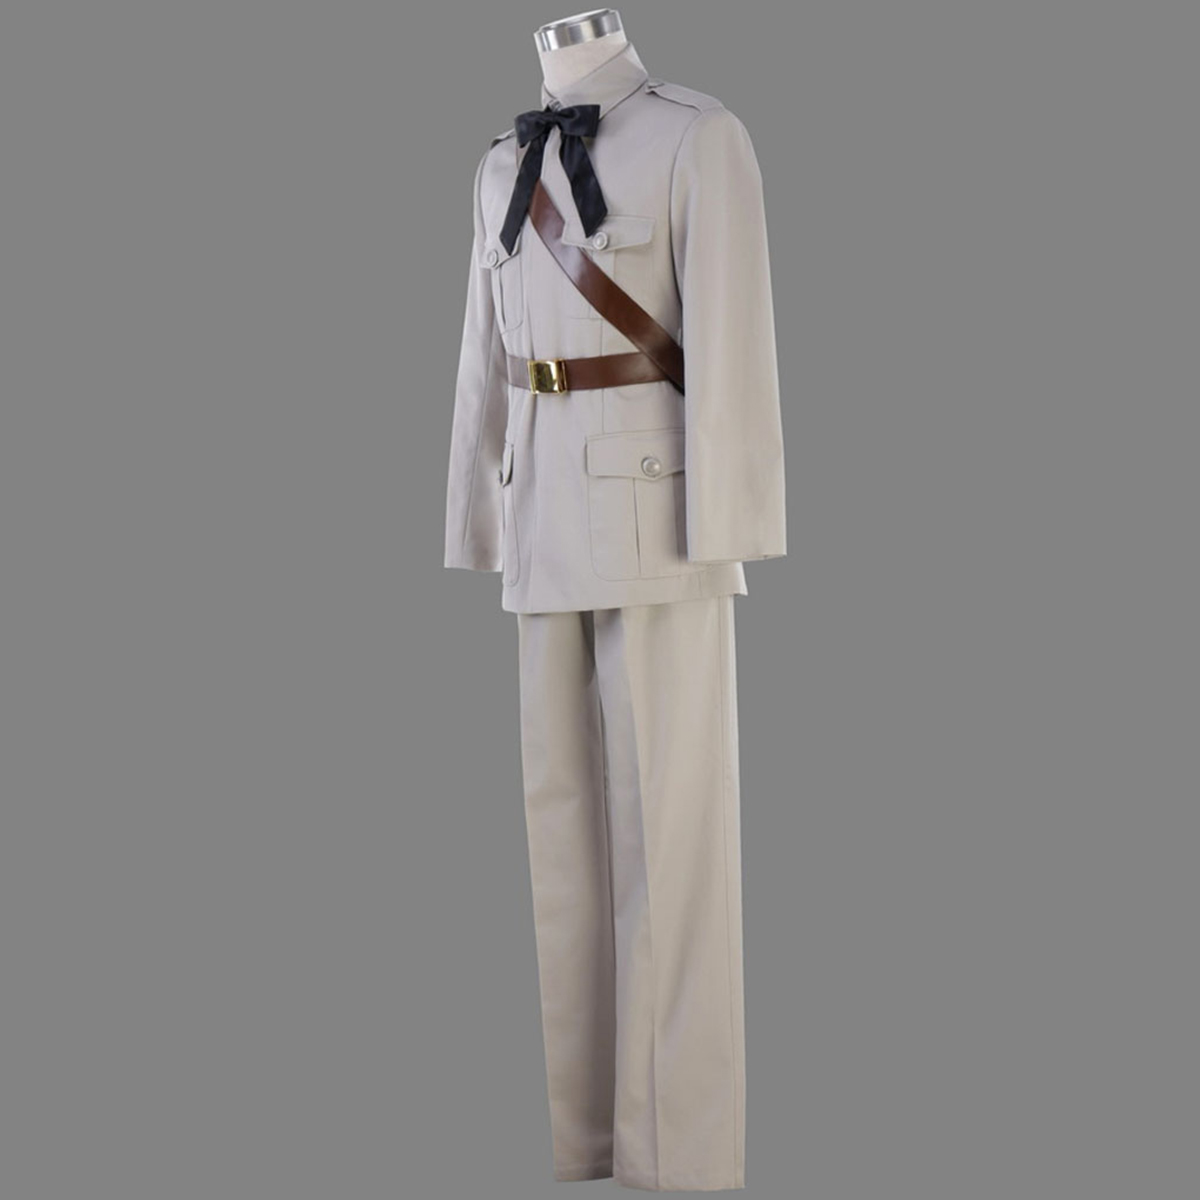 Axis Powers Hetalia Spain Antonio Fernandez Carriedo 1 Cosplay Costumes New Zealand Online Store